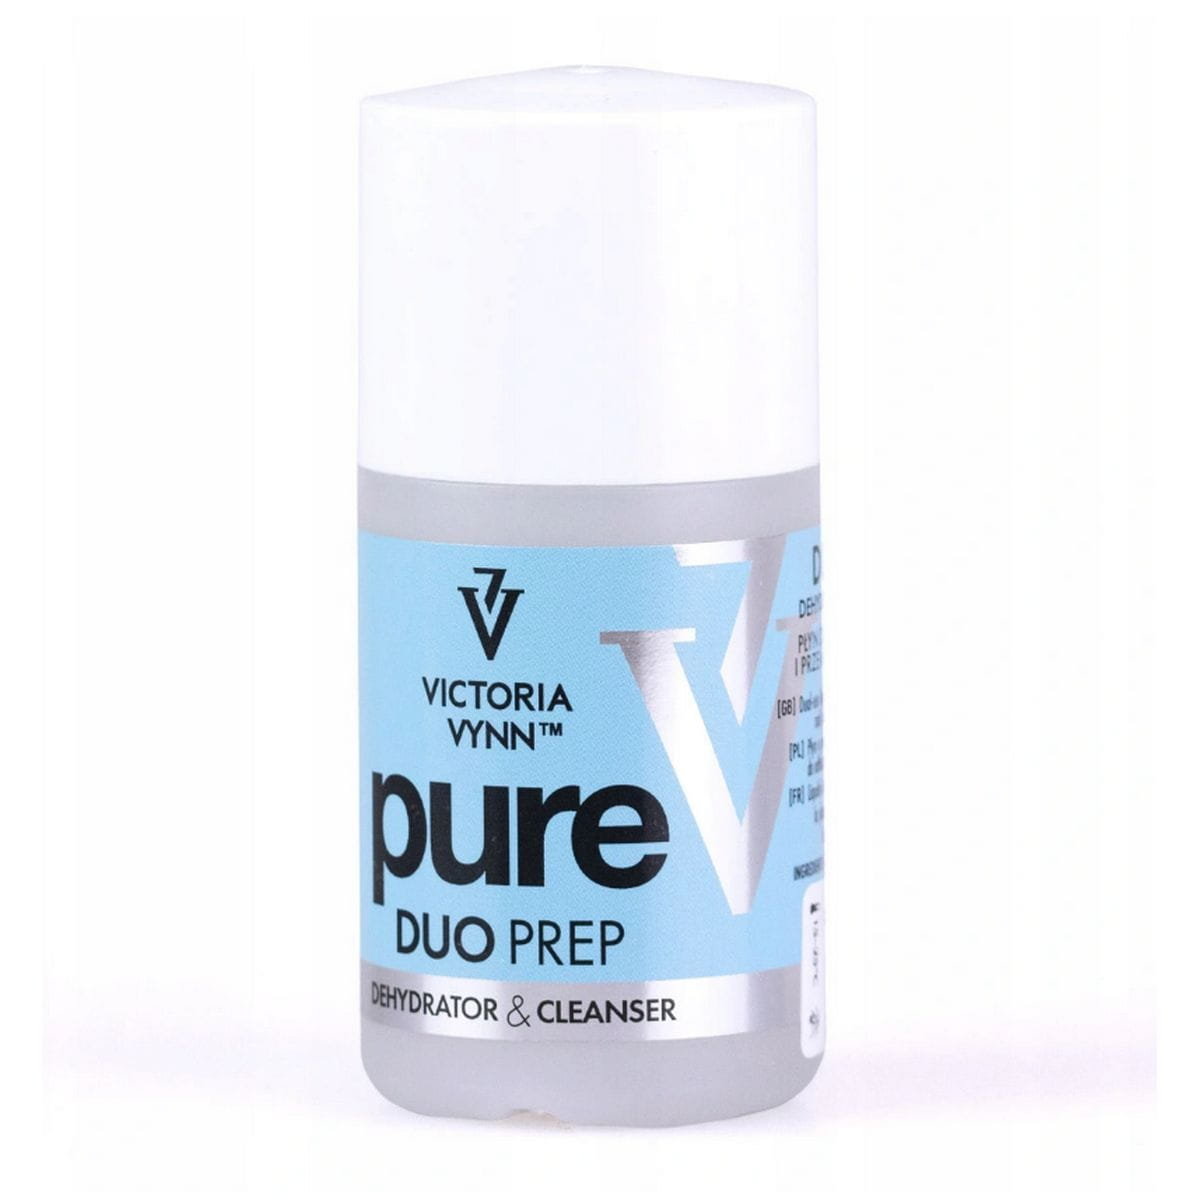 Victoria Vynn Pure Duo Prep 60ml